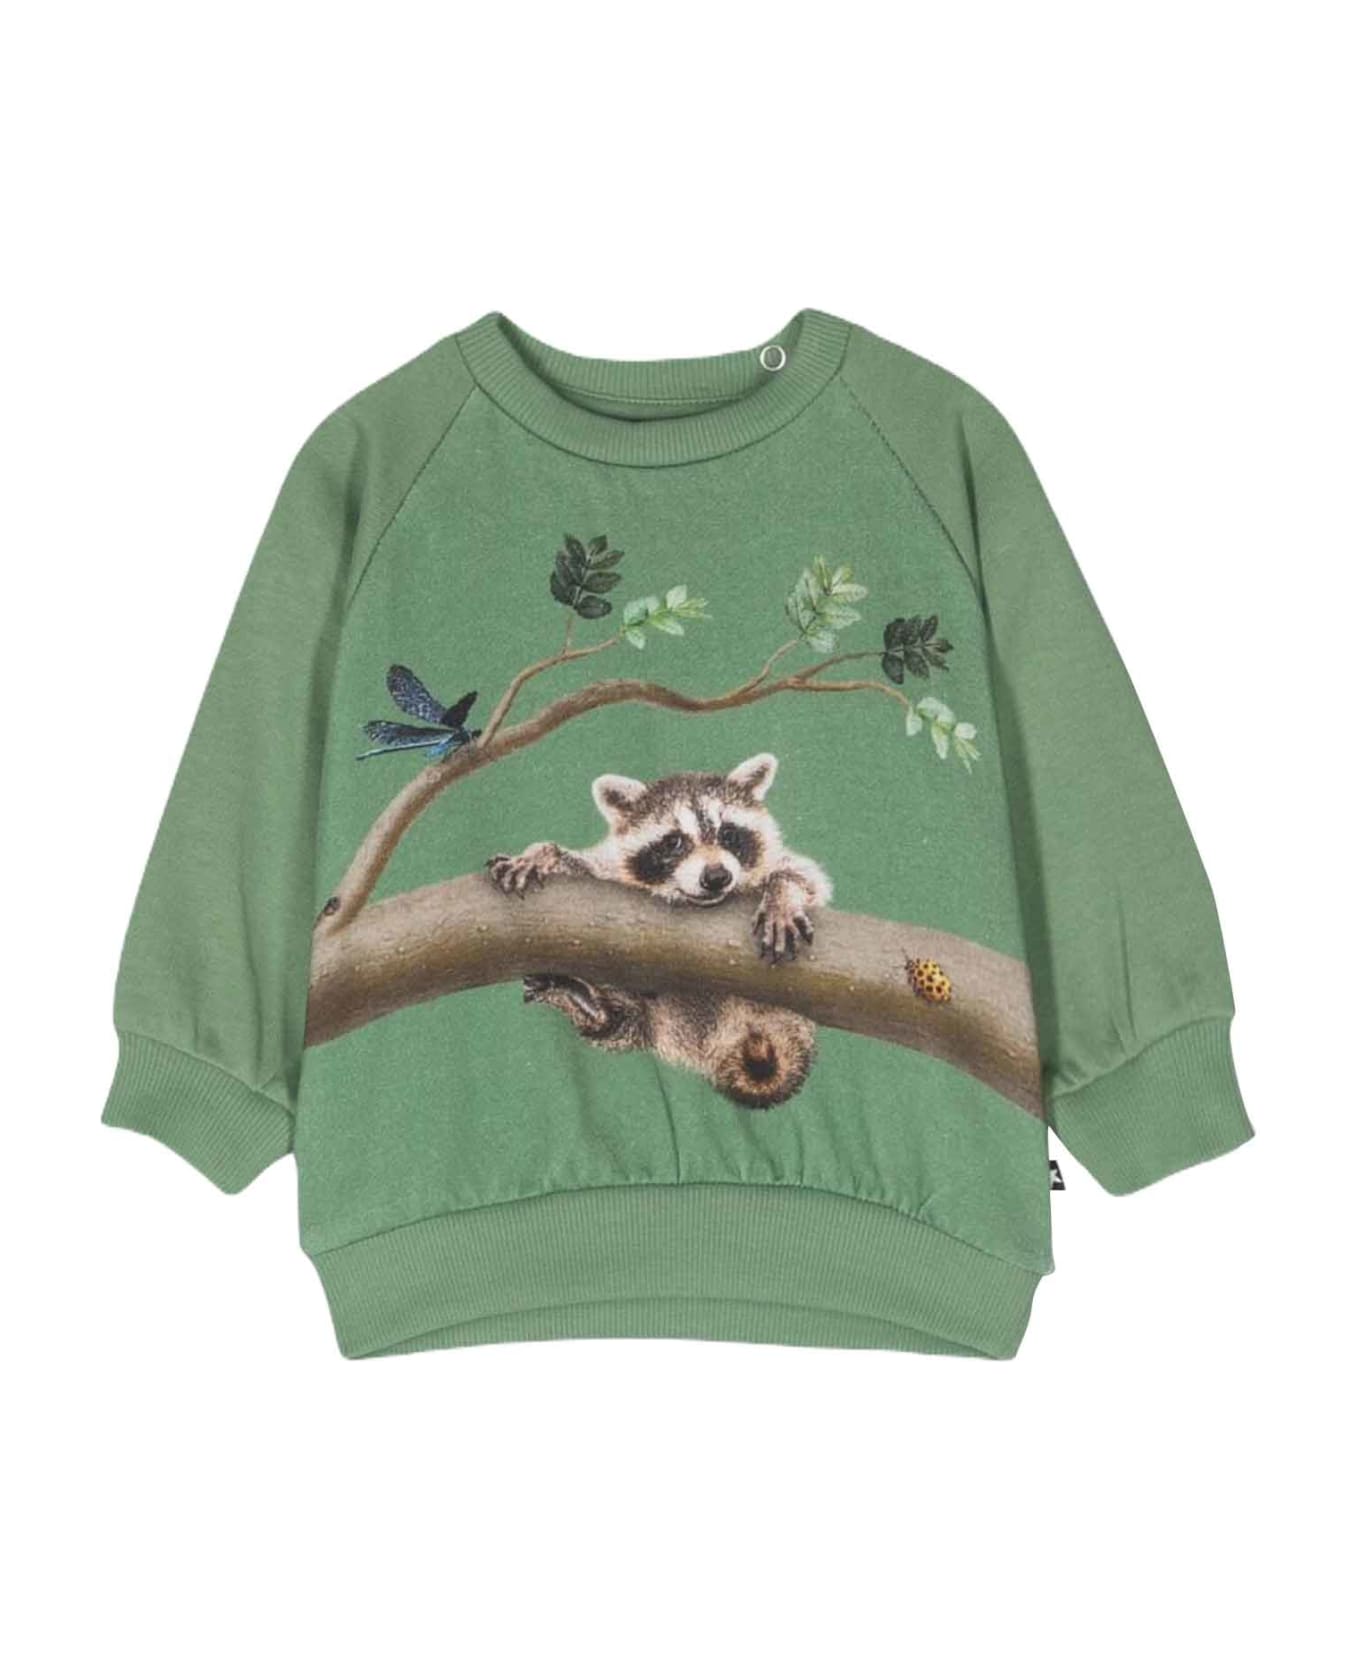 Molo Green Sweatshirt Unisex Kids - Verde